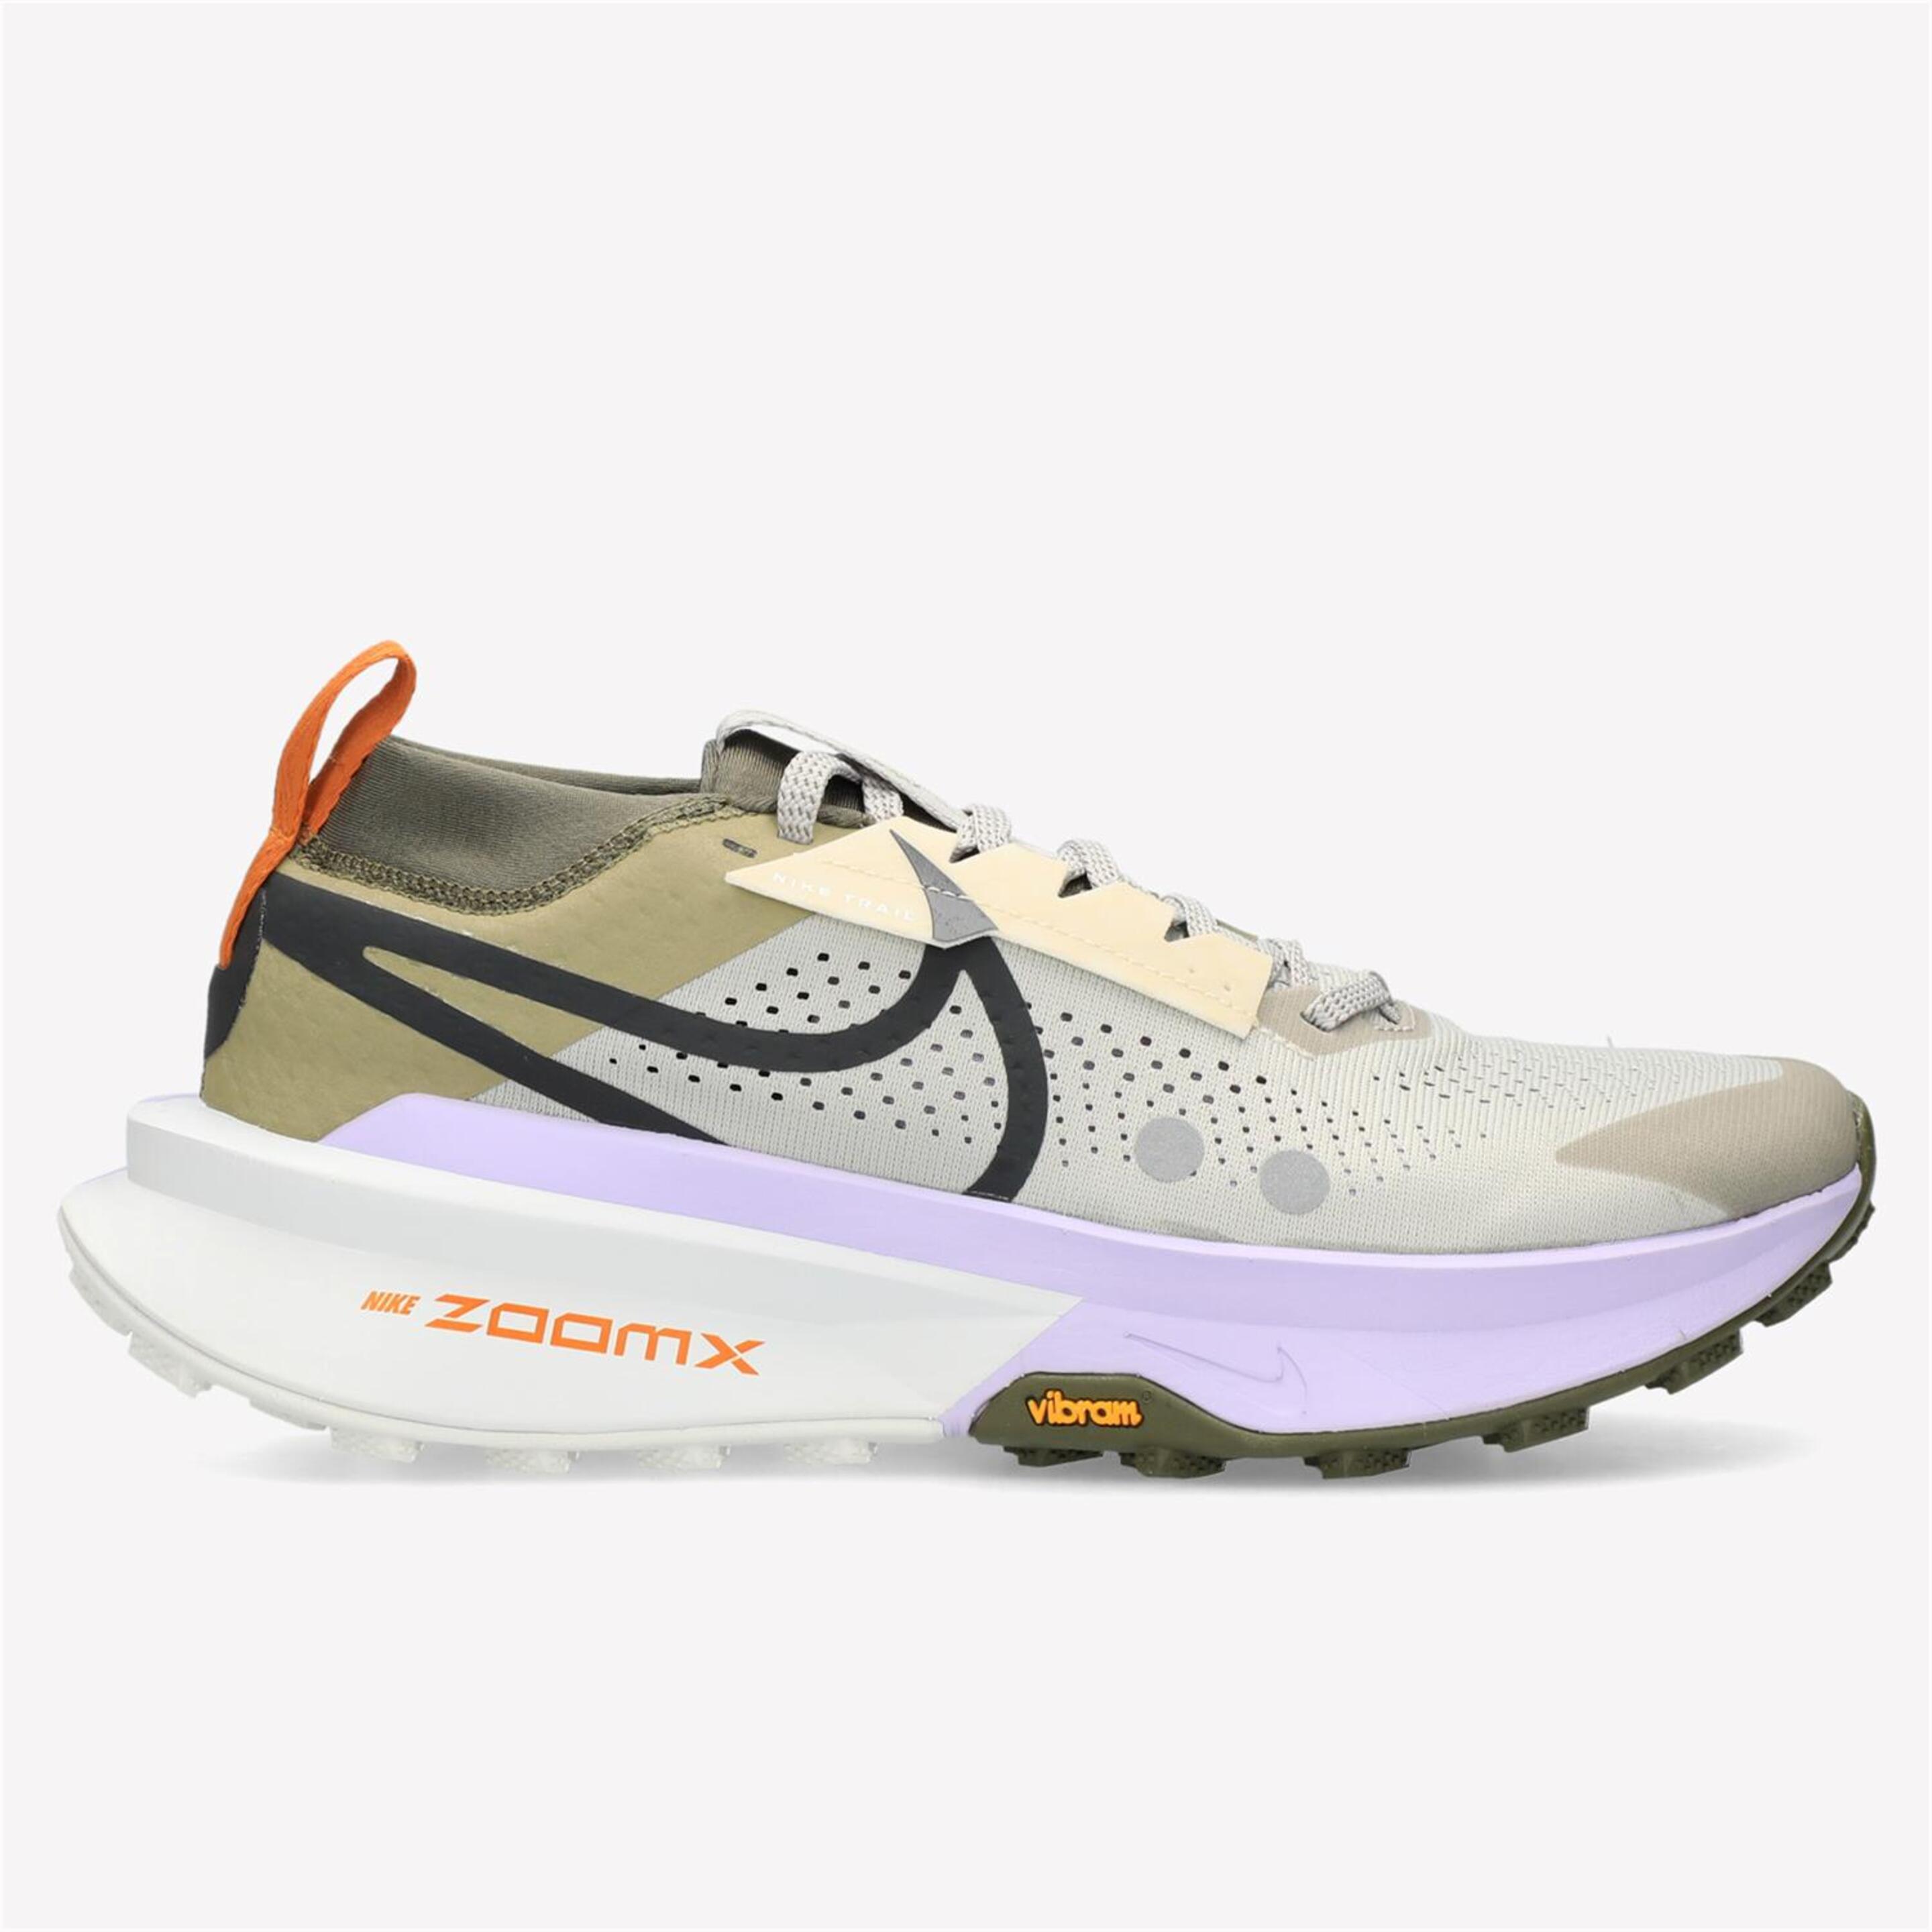 Nike Zegama - gris - Zapatillas Trail Hombre